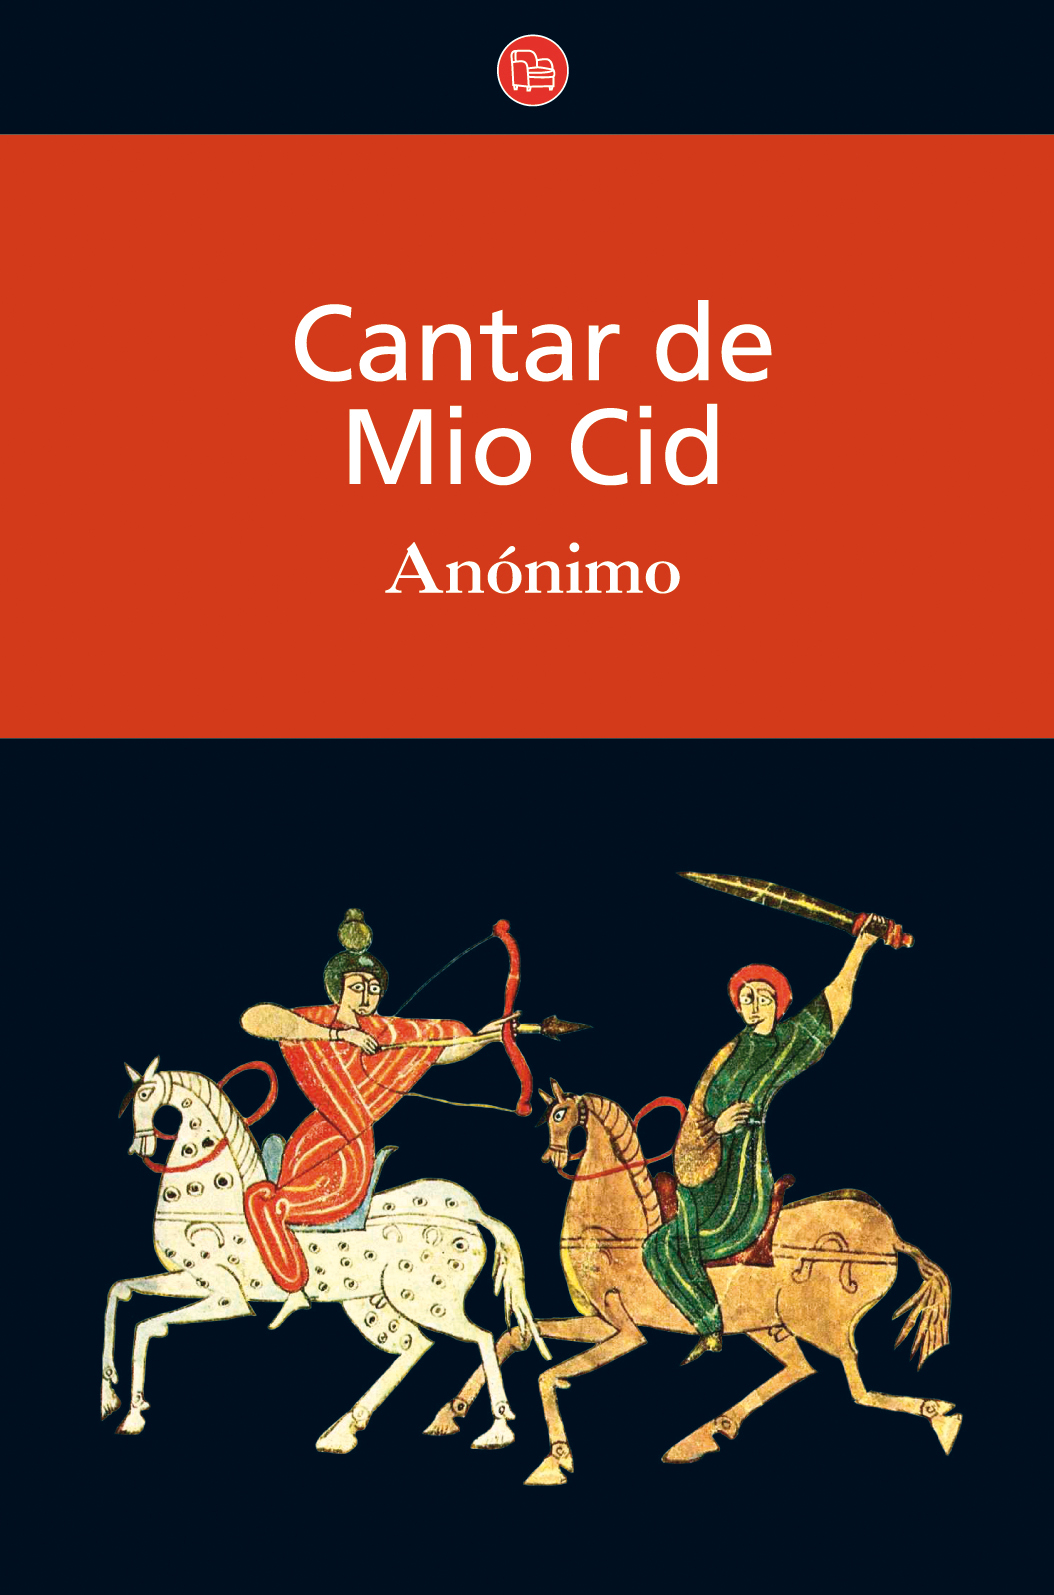 Libro de audio Cantar de Mio Cid – Anónimo